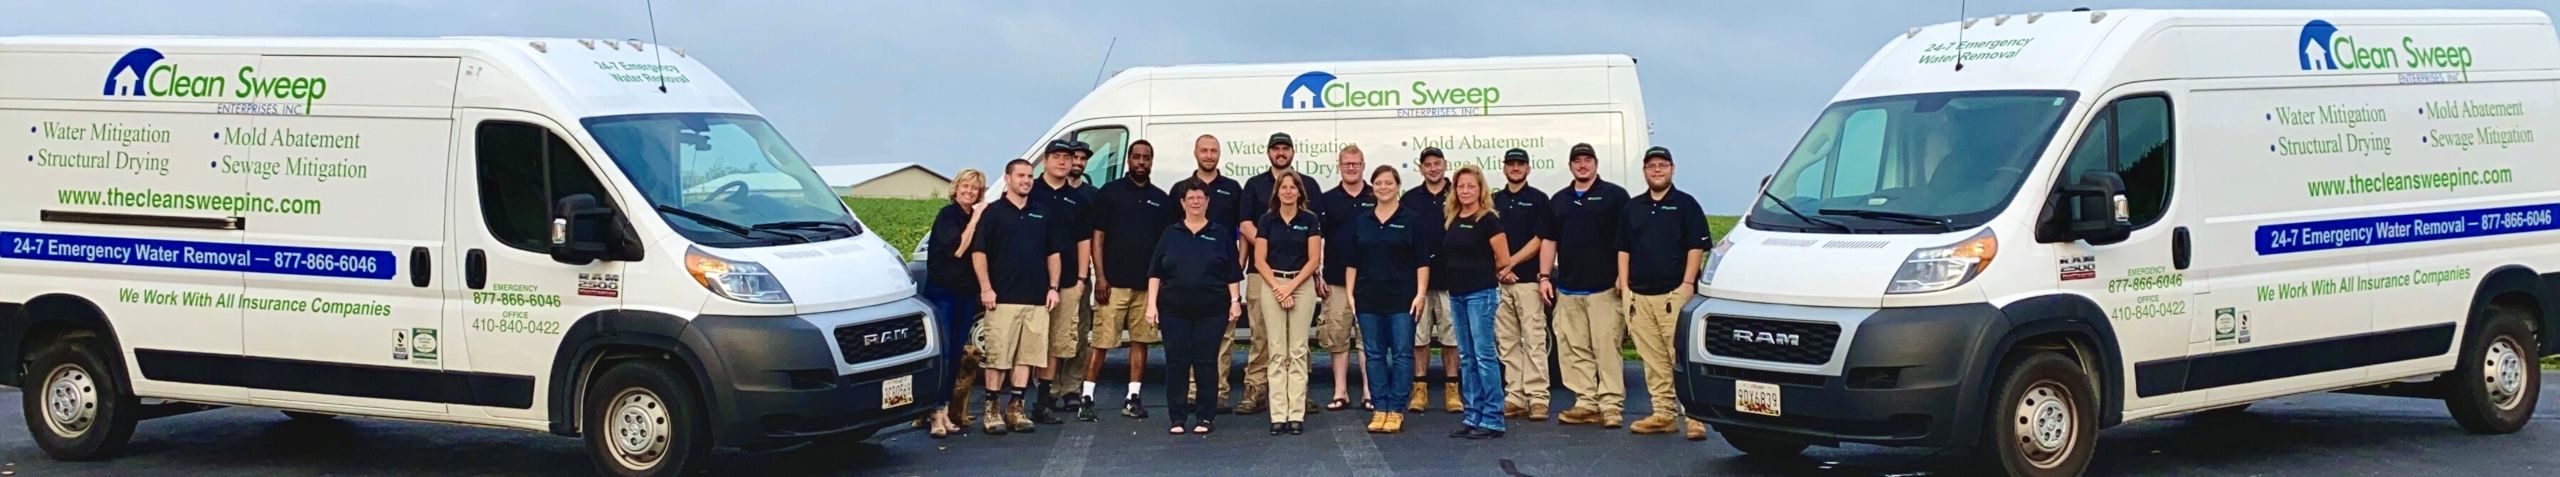 Clean Sweep Enterprises, Inc.'s Staff